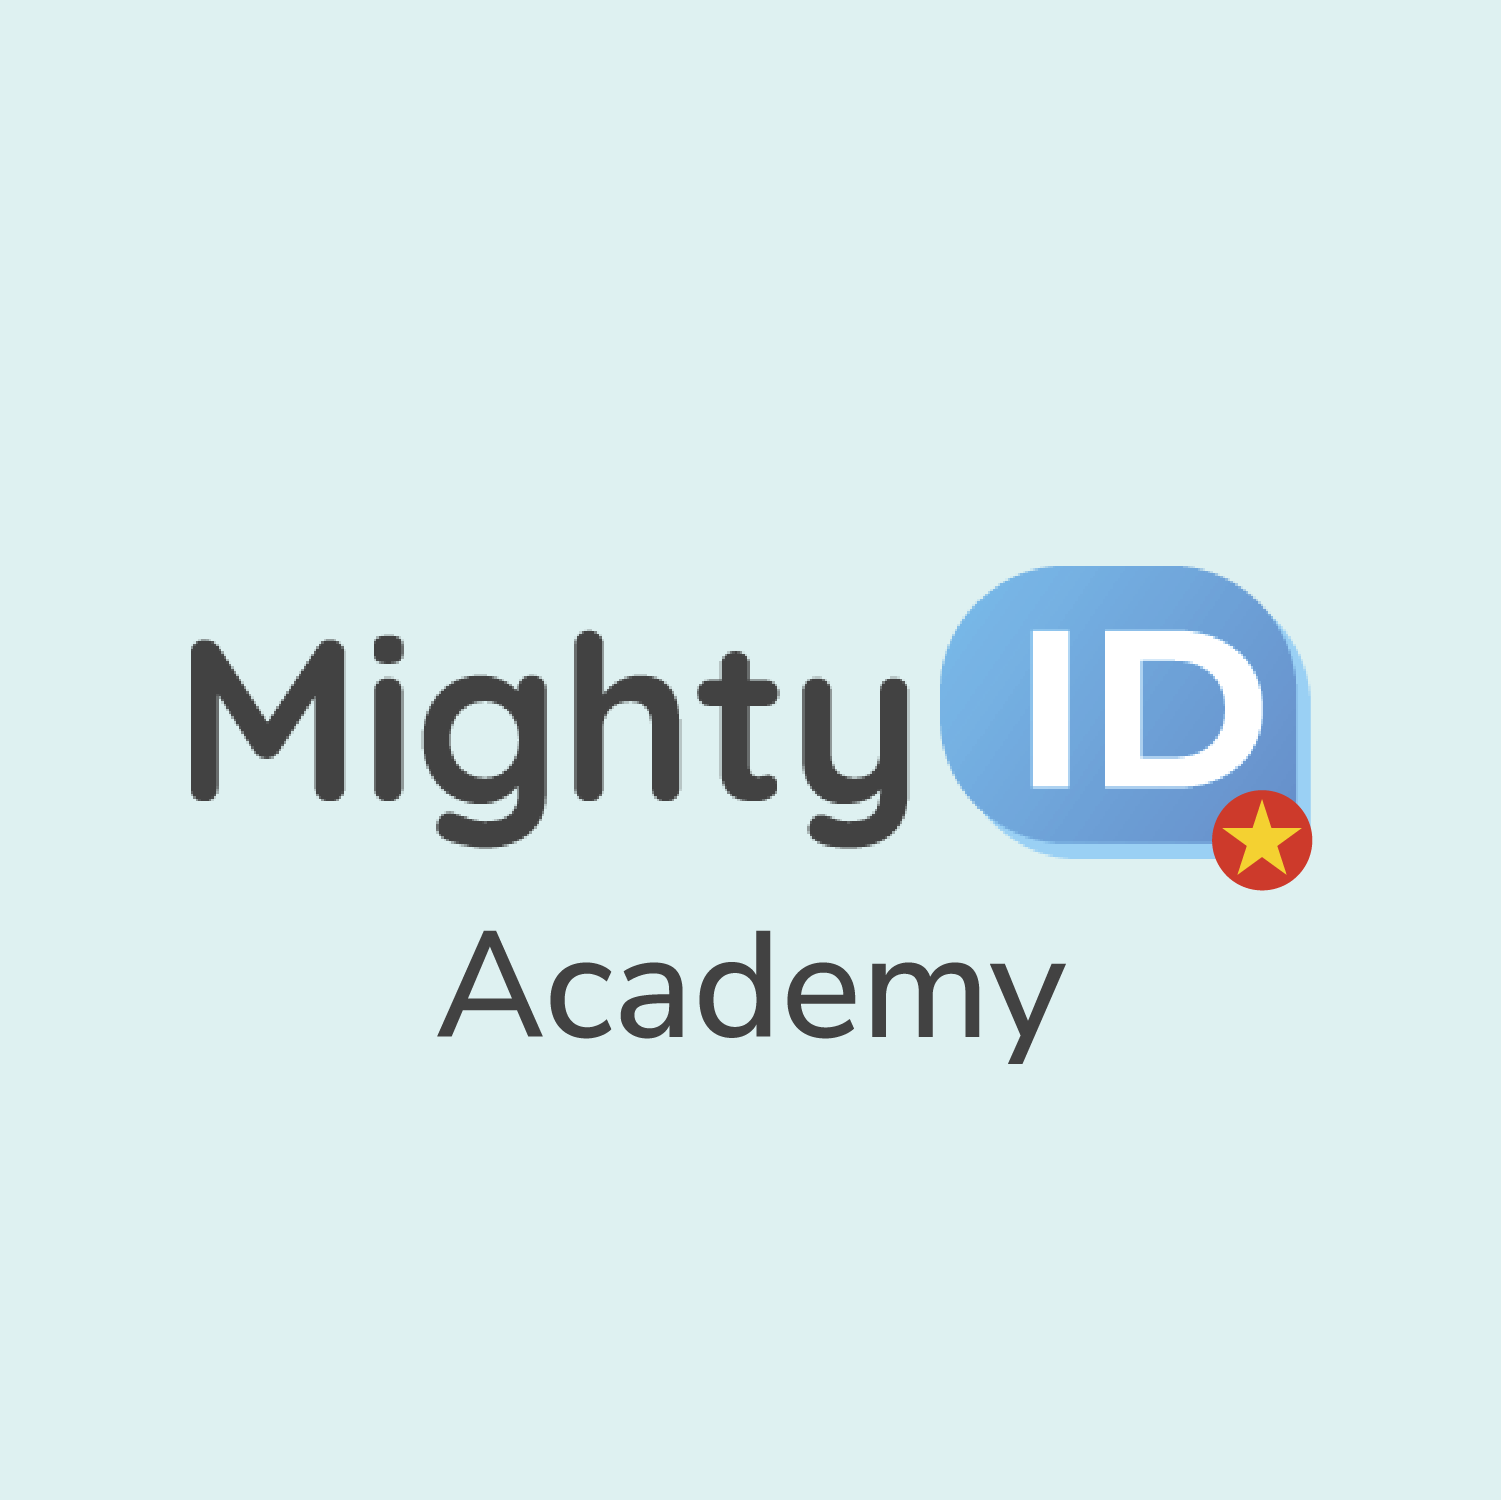 MightyID Academy